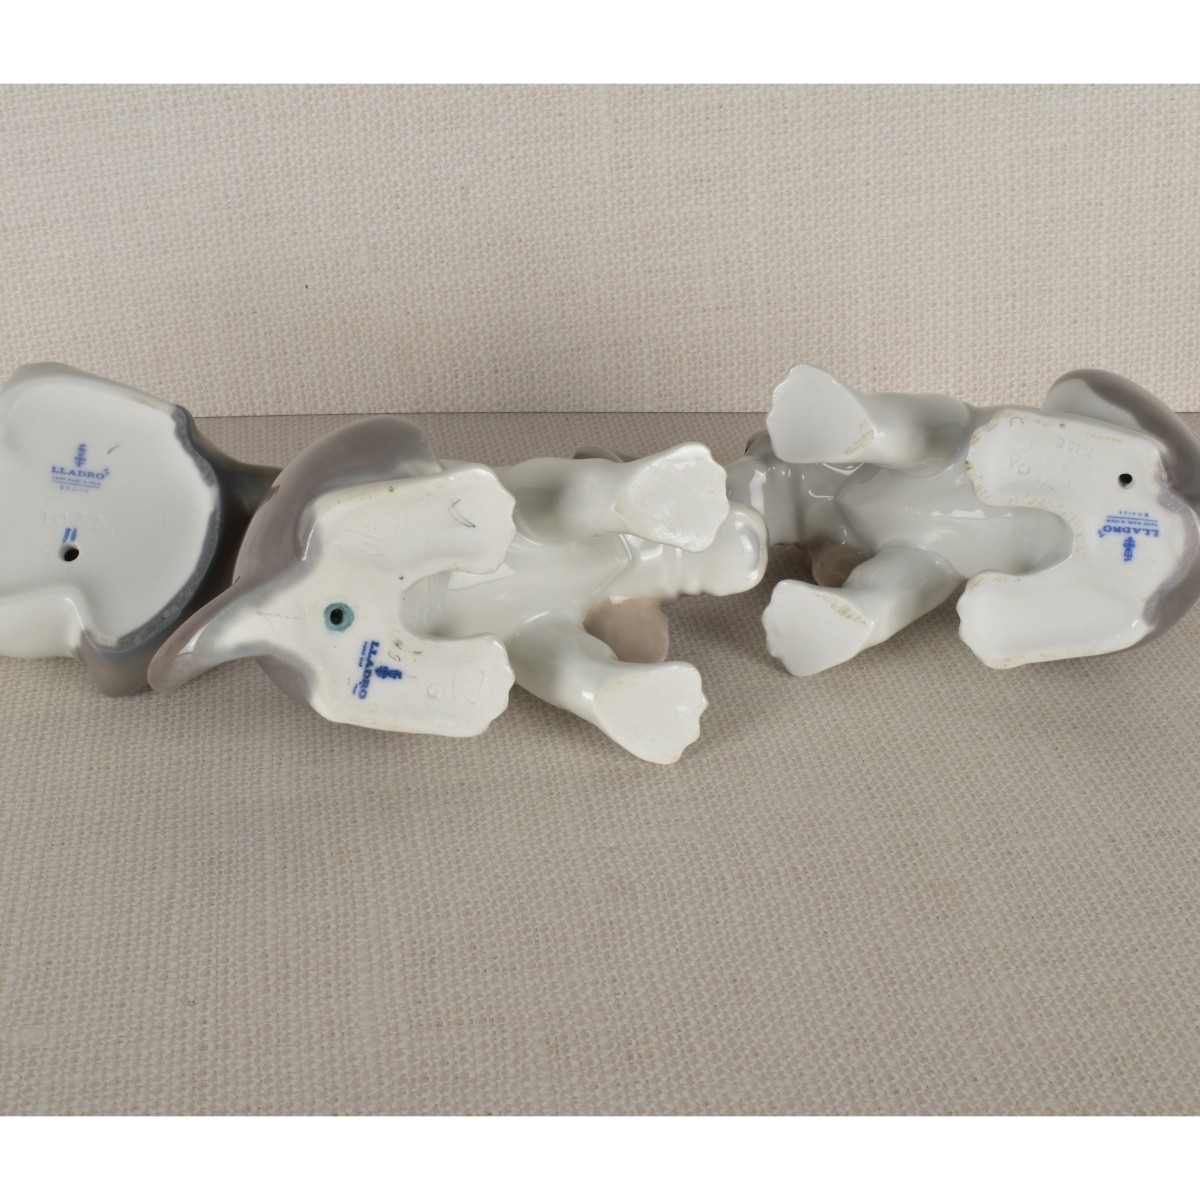 Three Lladro Porcelain Puppy Figurines